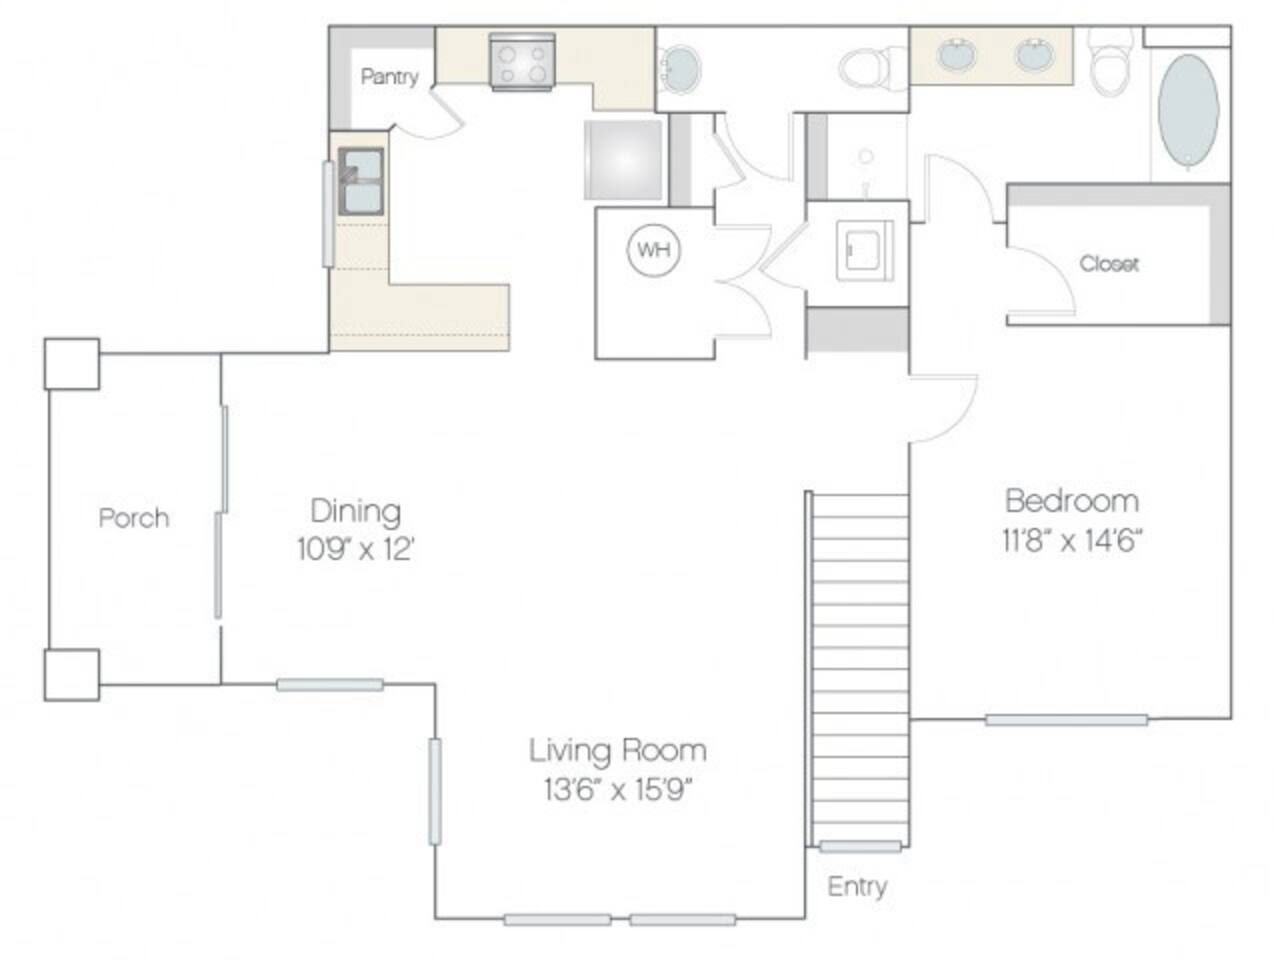 Floorplan diagram for AT2.R, showing 1 bedroom